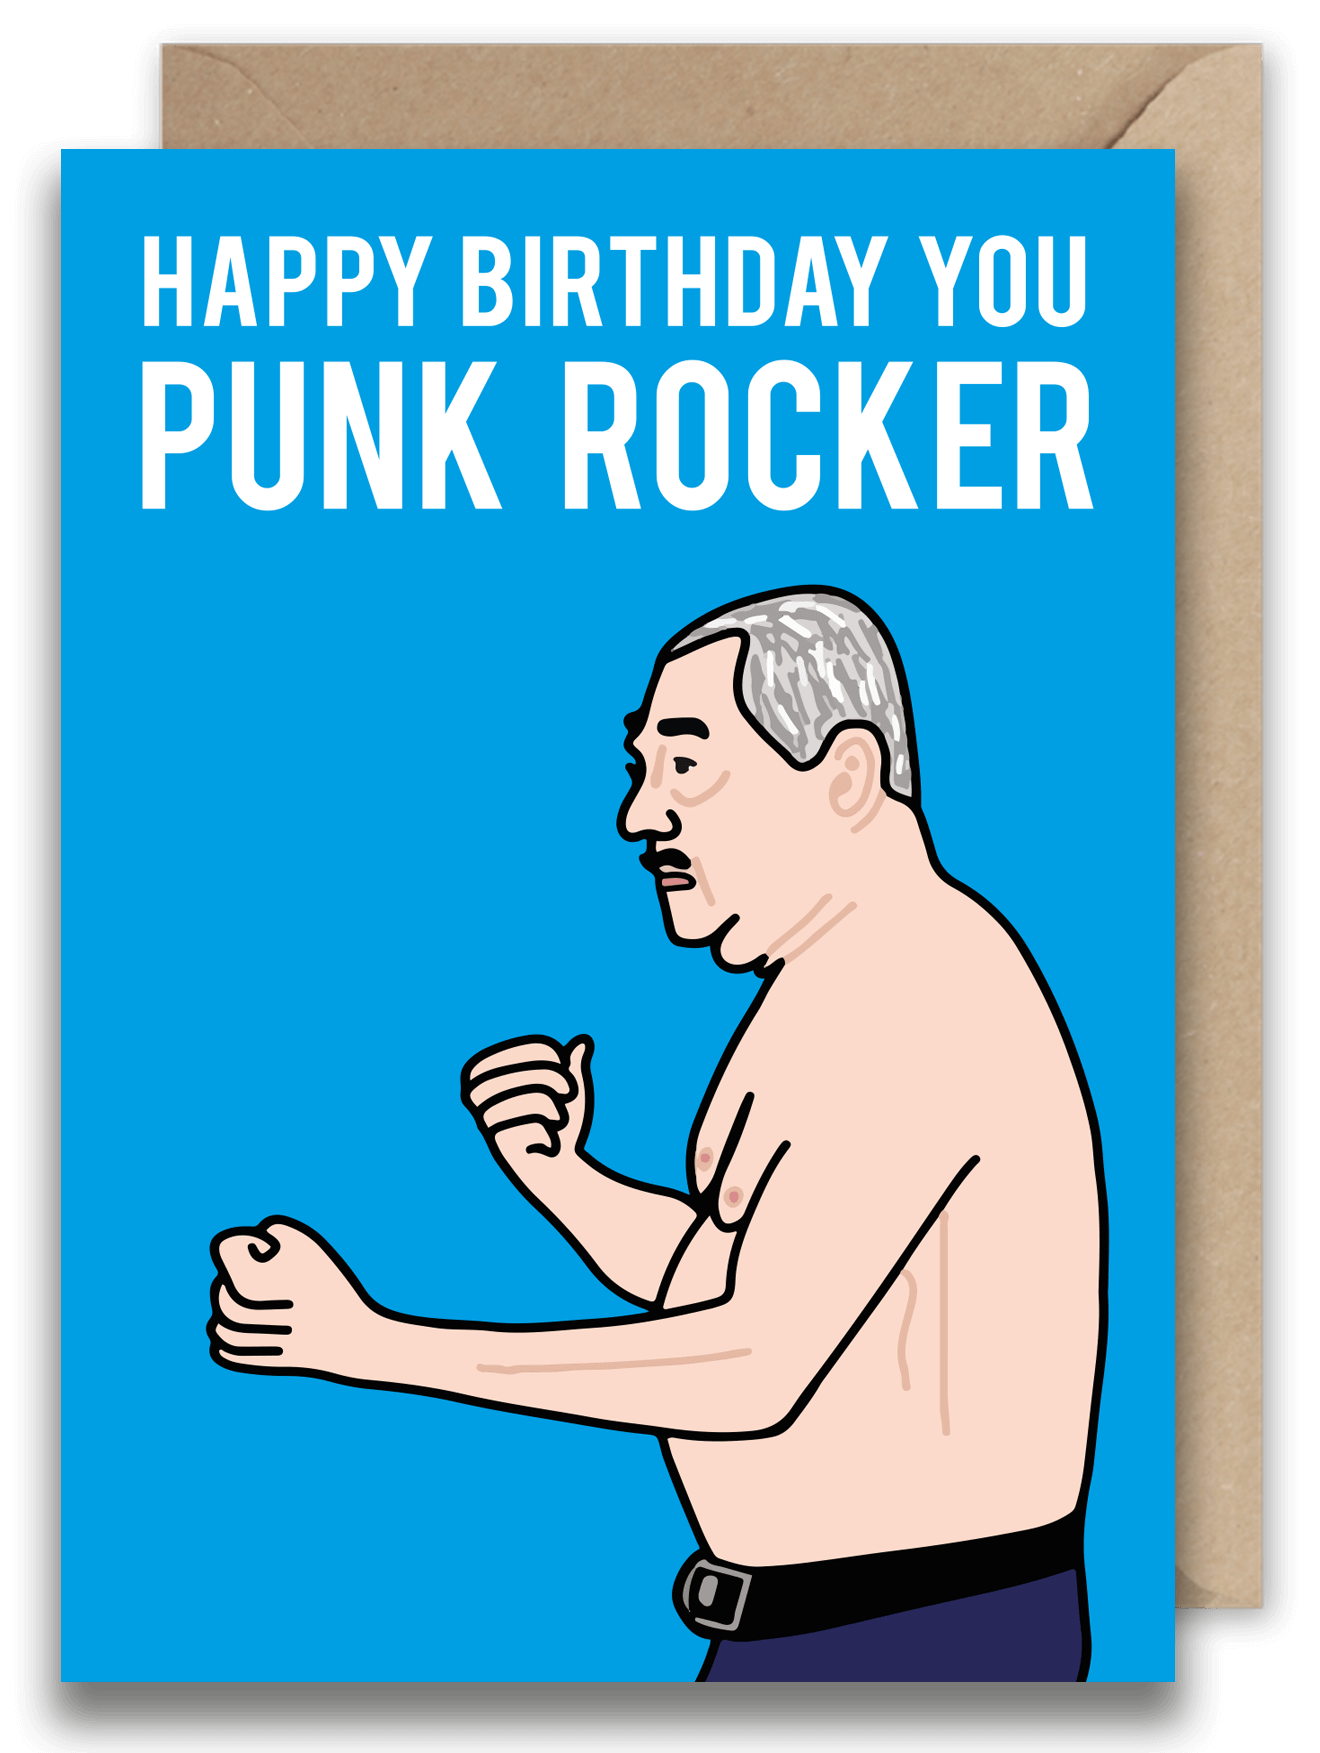 Happy Birthday You Punk Rocker Mr Morris Friday Night Dinner Card Greeting Card From 